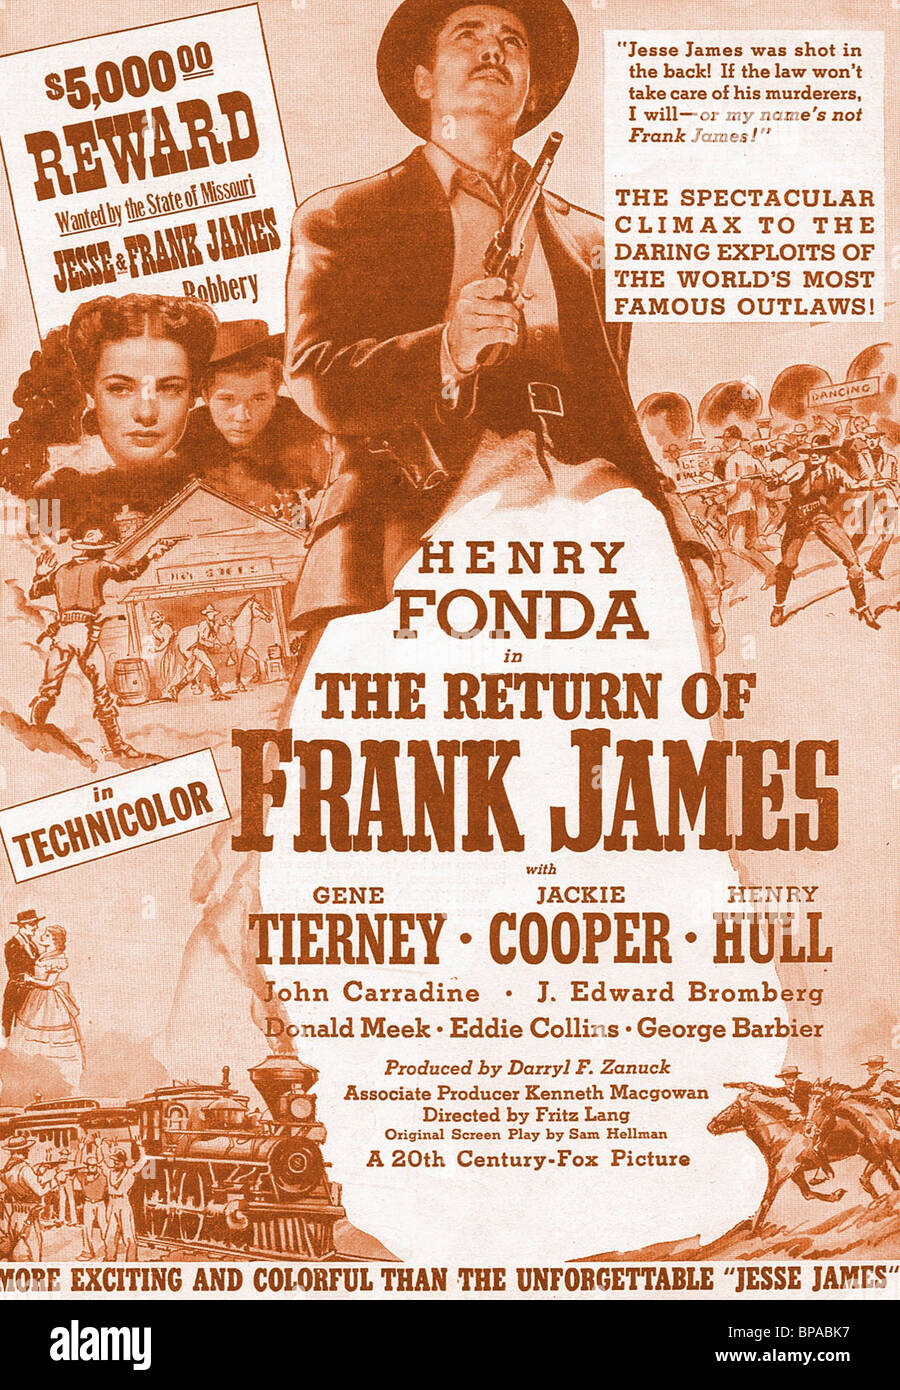 HENRY FONDA FILM POSTER THE RETURN OF FRANK JAMES (1940) Stock Photo